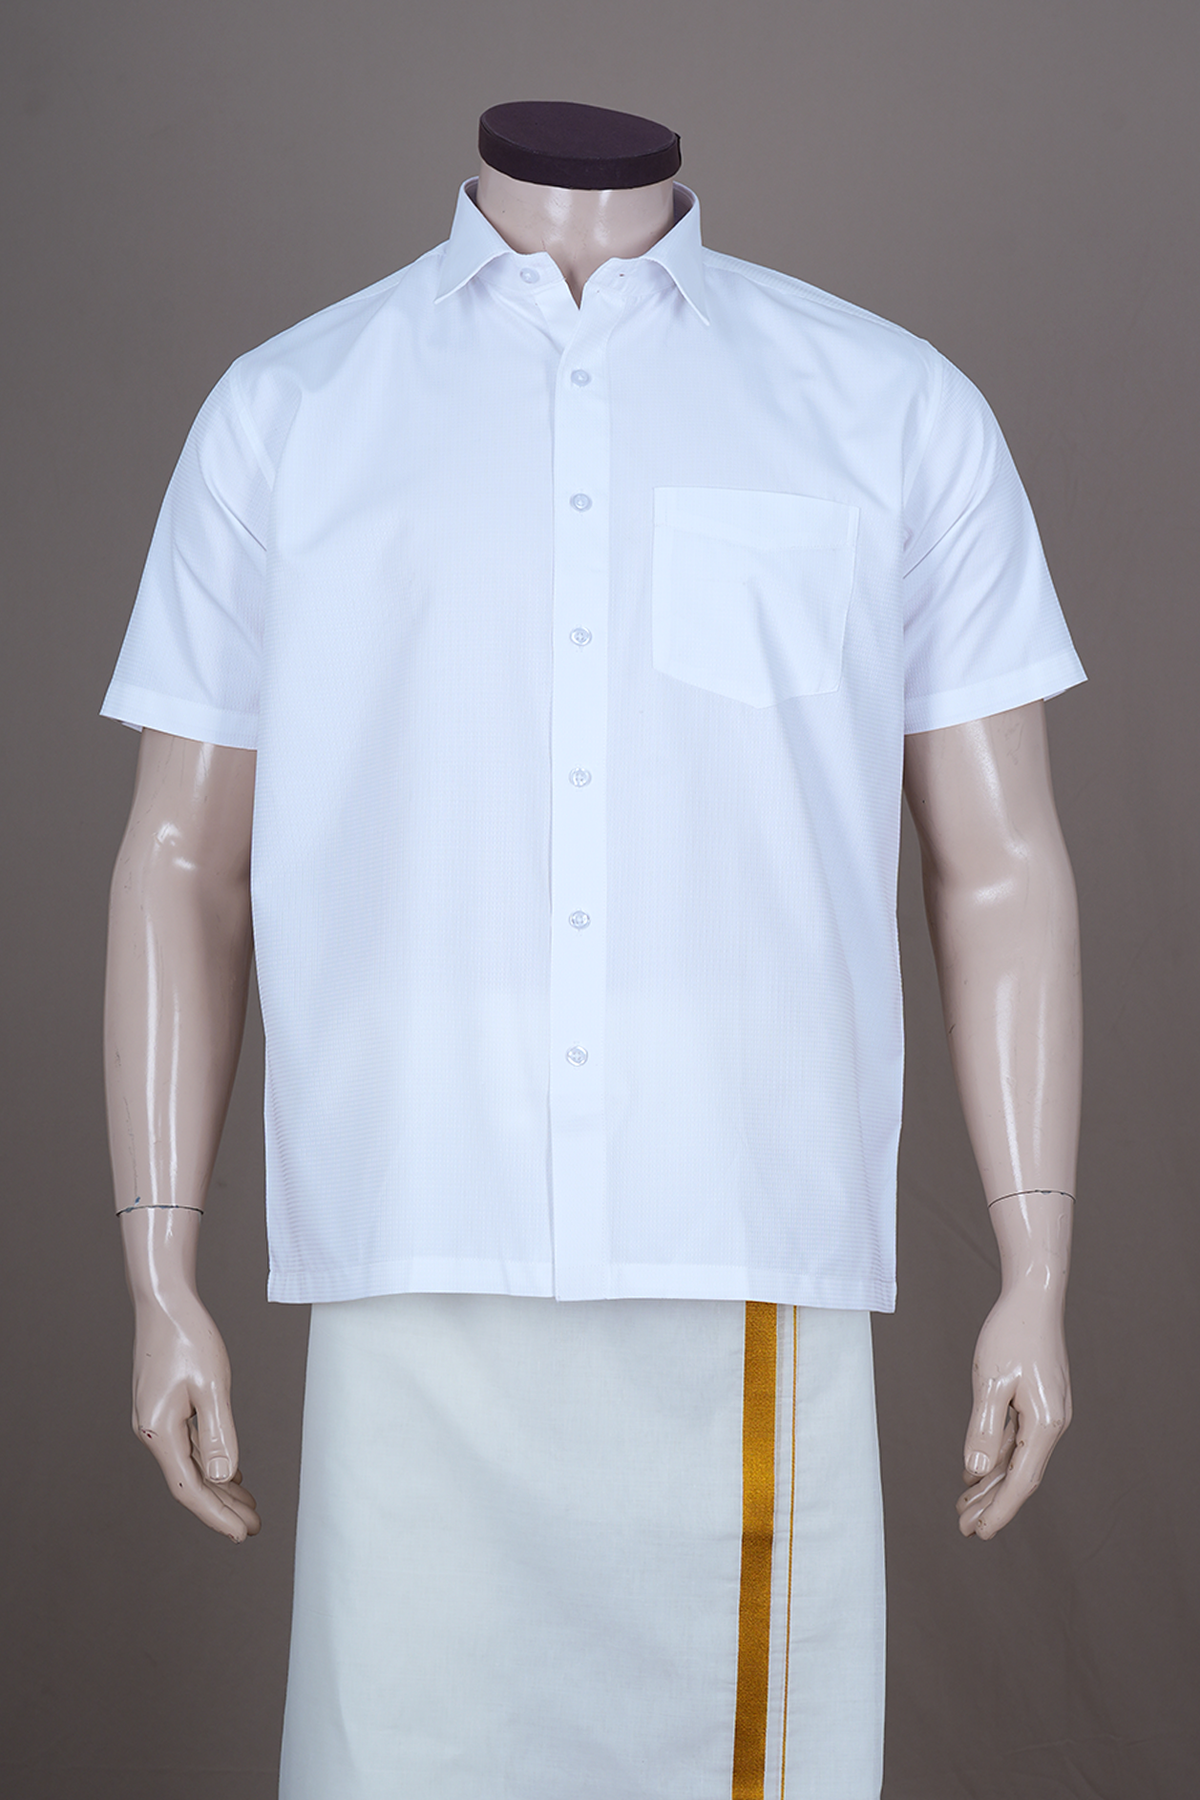 Regular Collar Self Checks Design Pure White Cotton Shirt